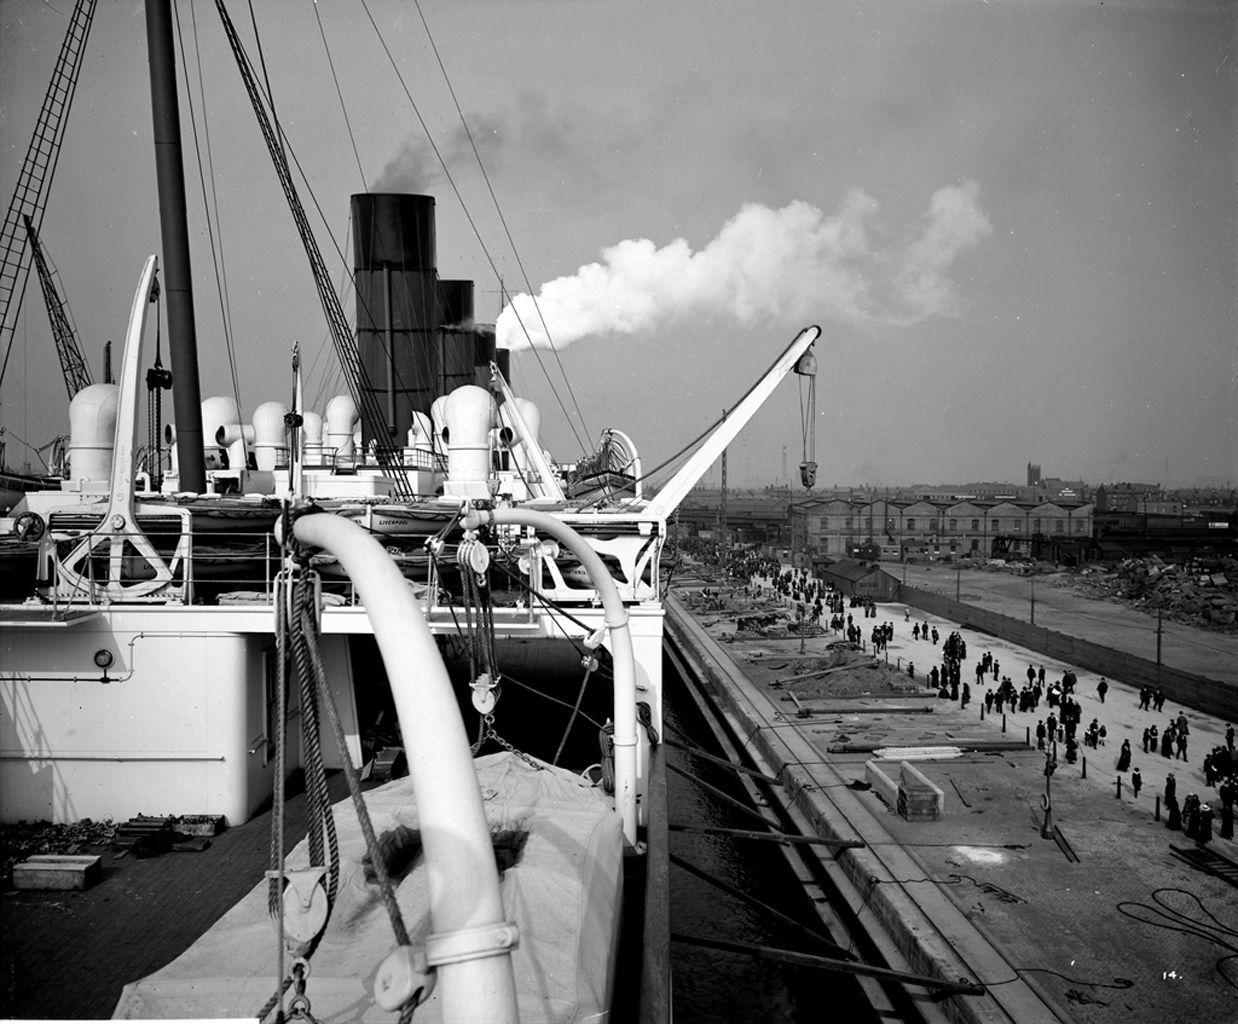 View from the Docking Bridge on the 'Aquitania' (1914)